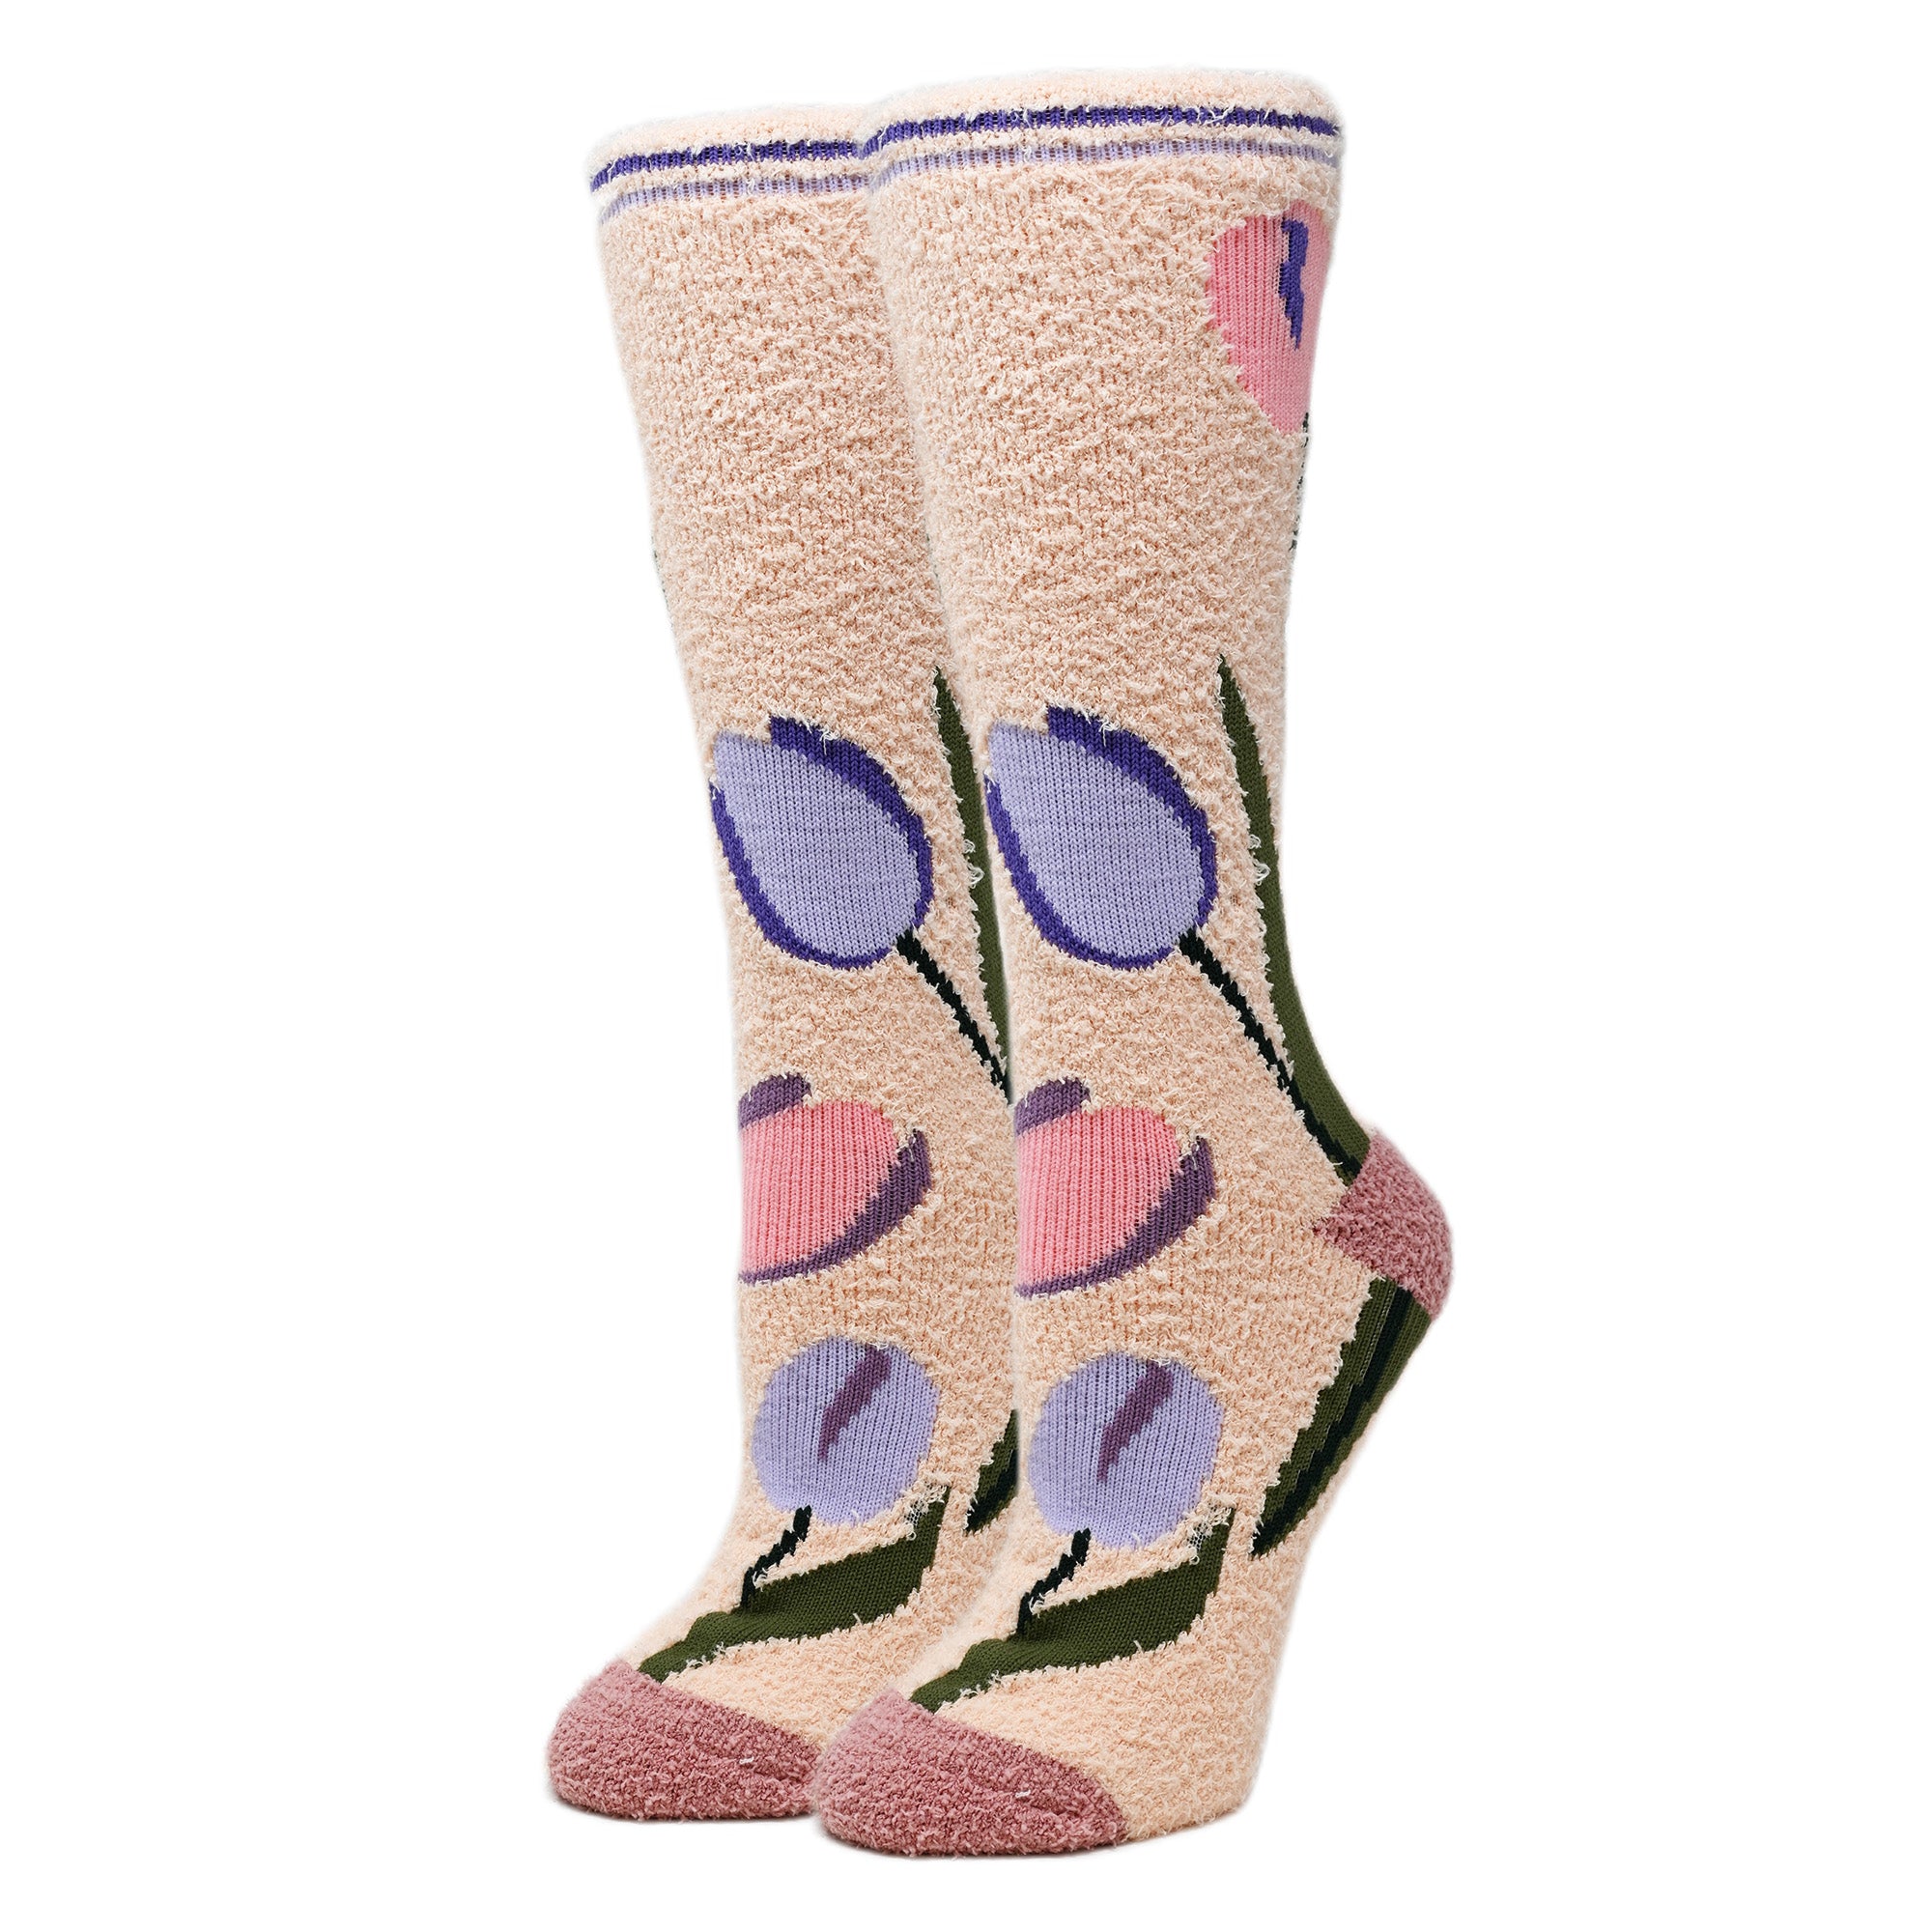 Emma Socks, Fuzzy Crew Socks For Women